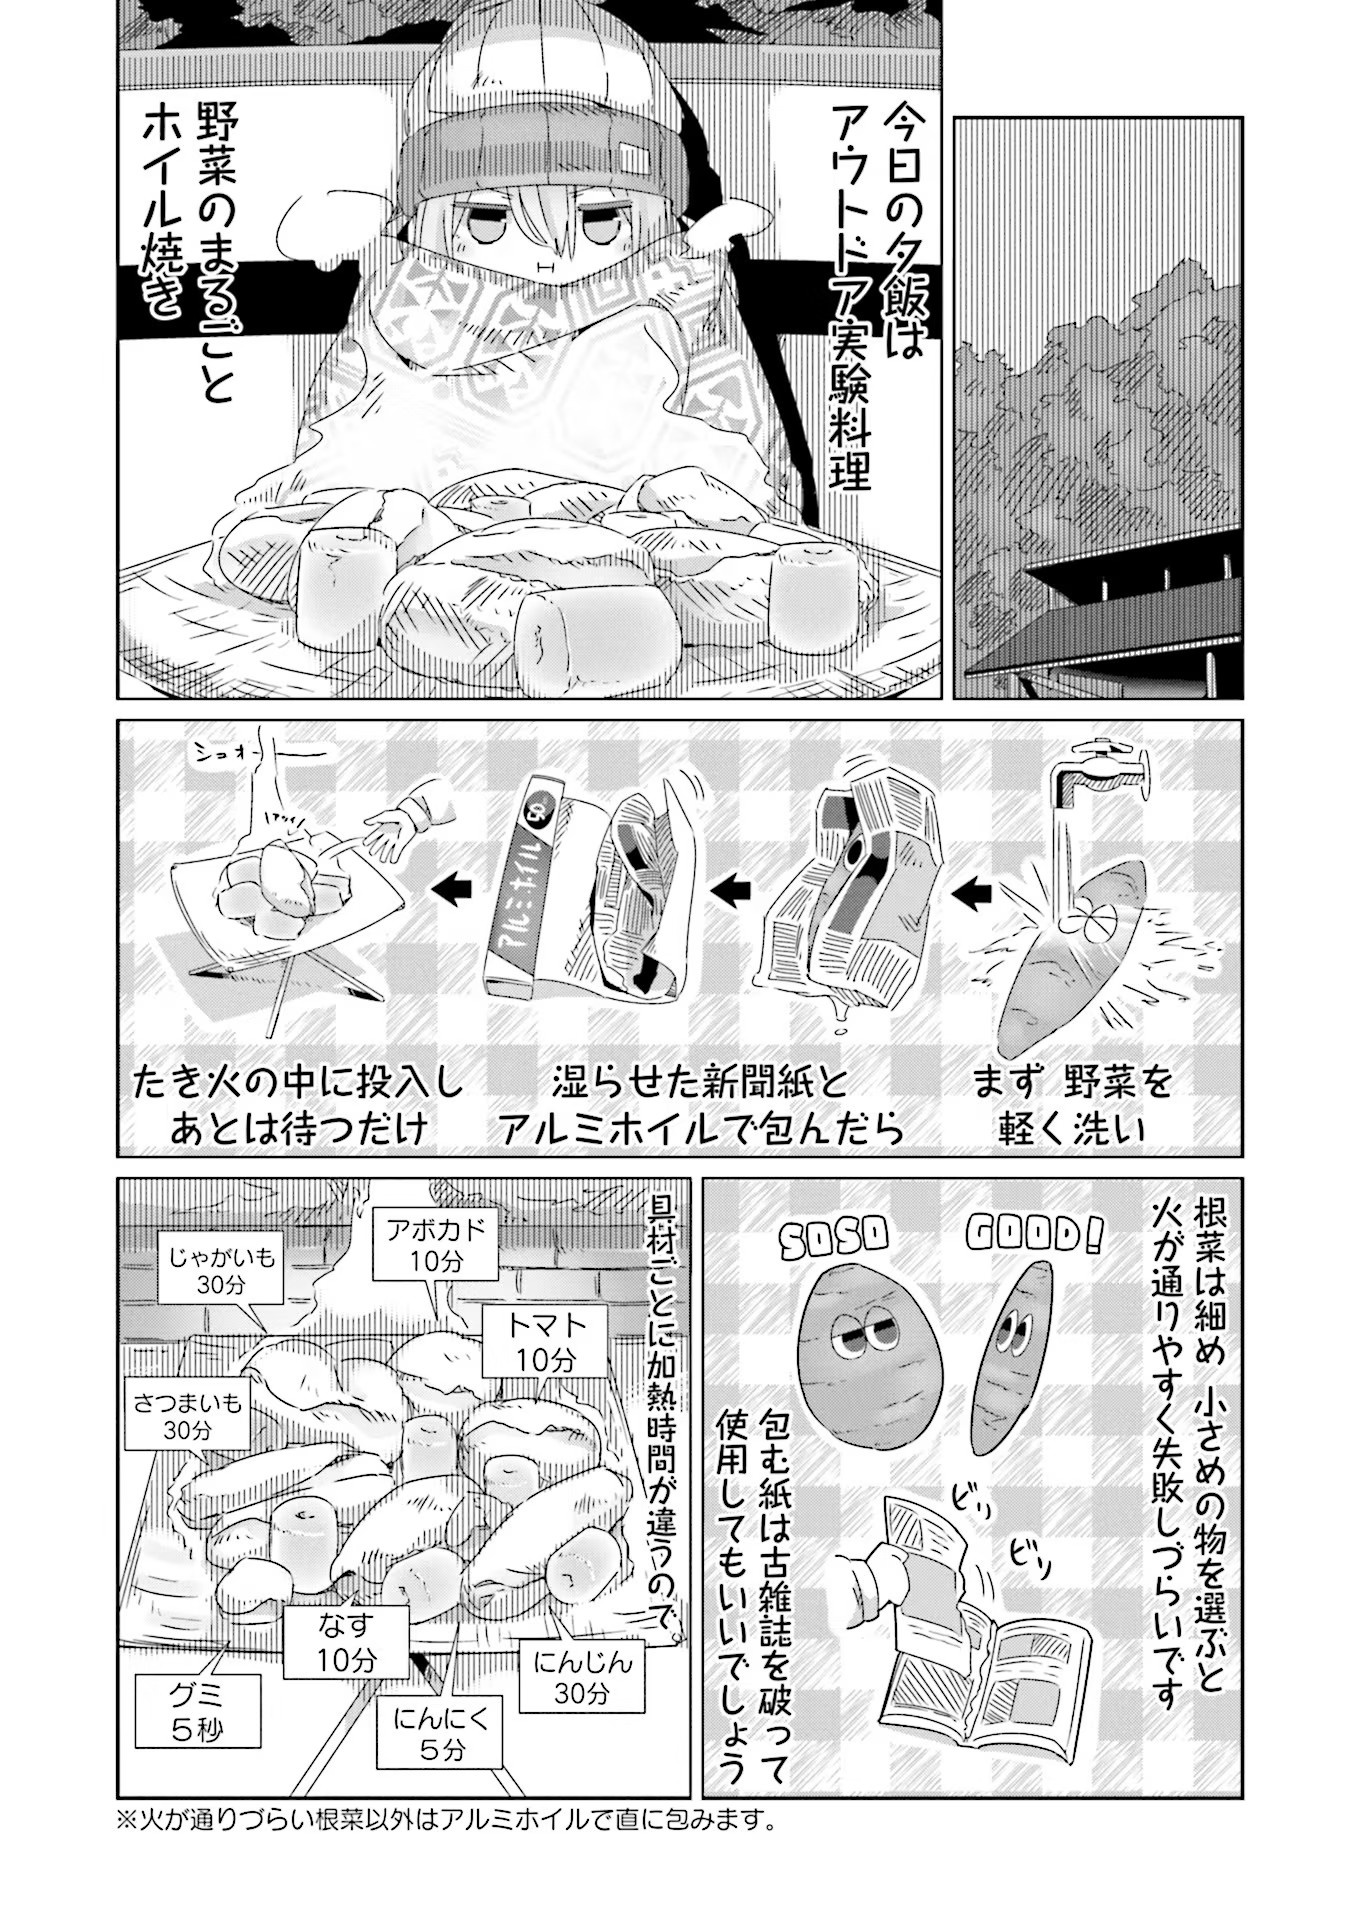 Yuru Camp - Chapter 39 - Page 1